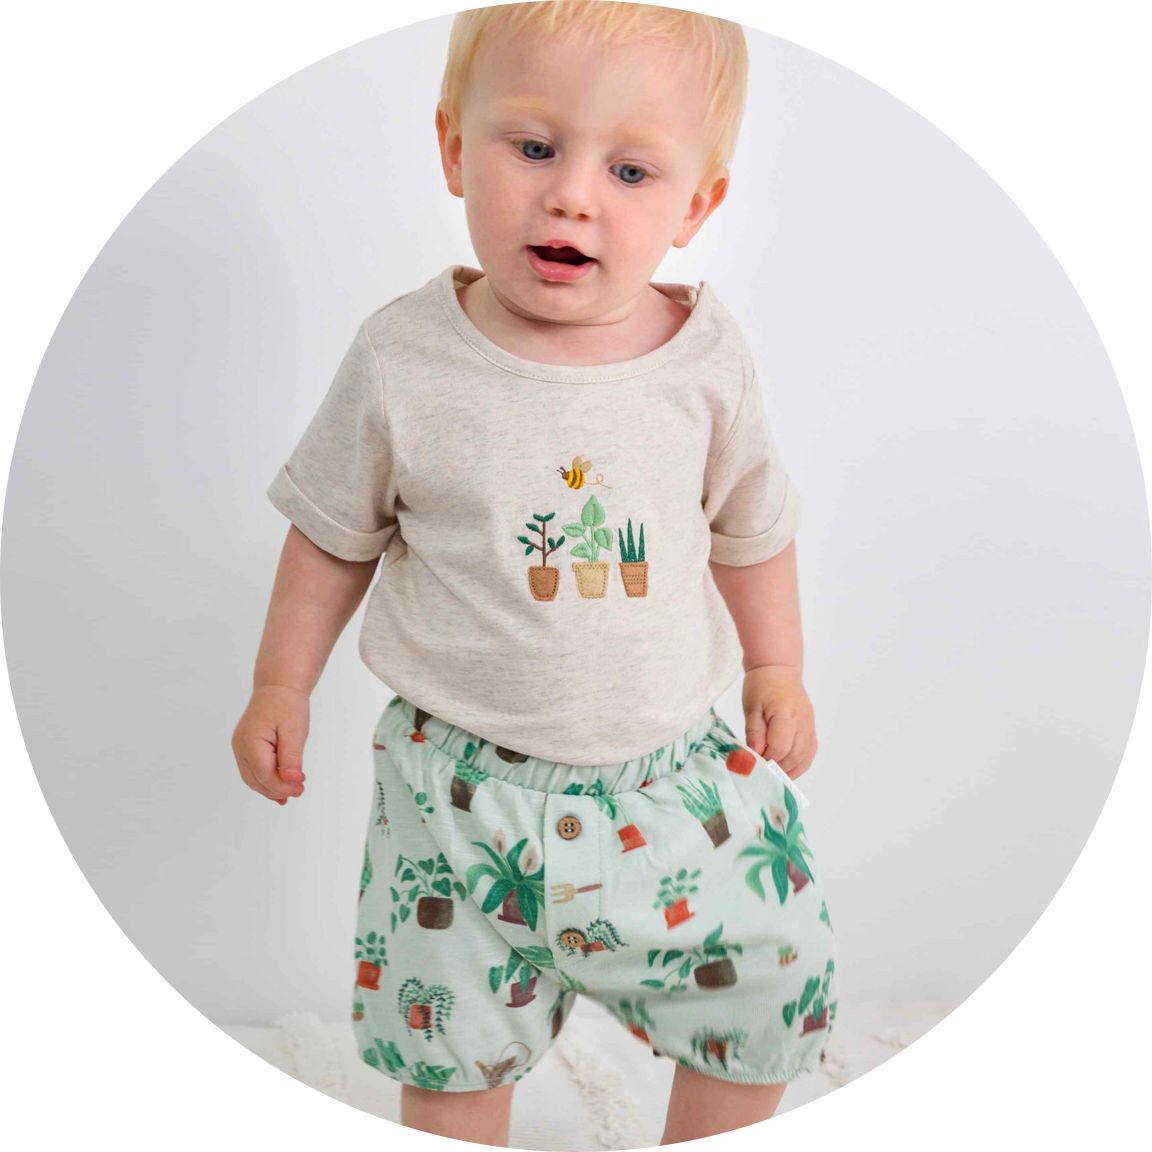 Armani Infant Clothes Online Clearance, Save 65% | jlcatj.gob.mx